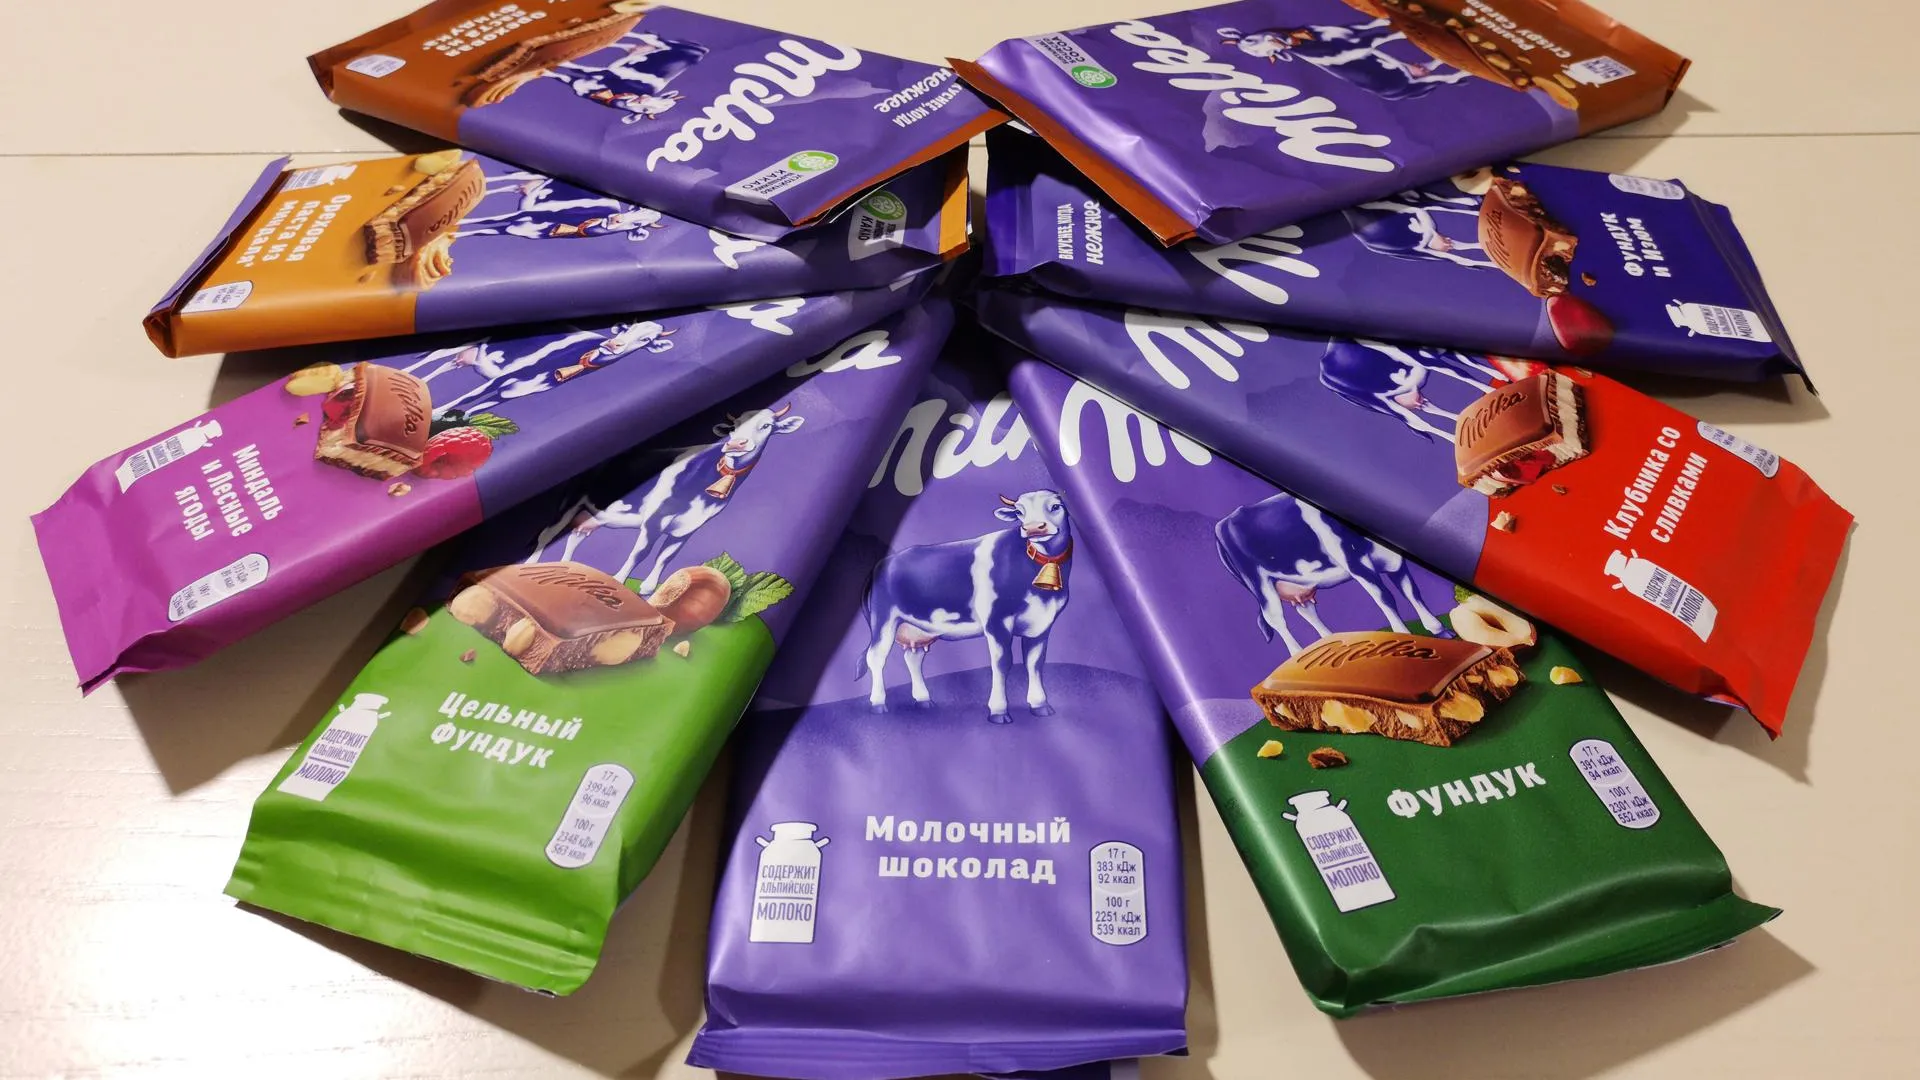 Bloomberg: Еврокомиссия оштрафовала производителя шоколада Milka на 337 млн евро